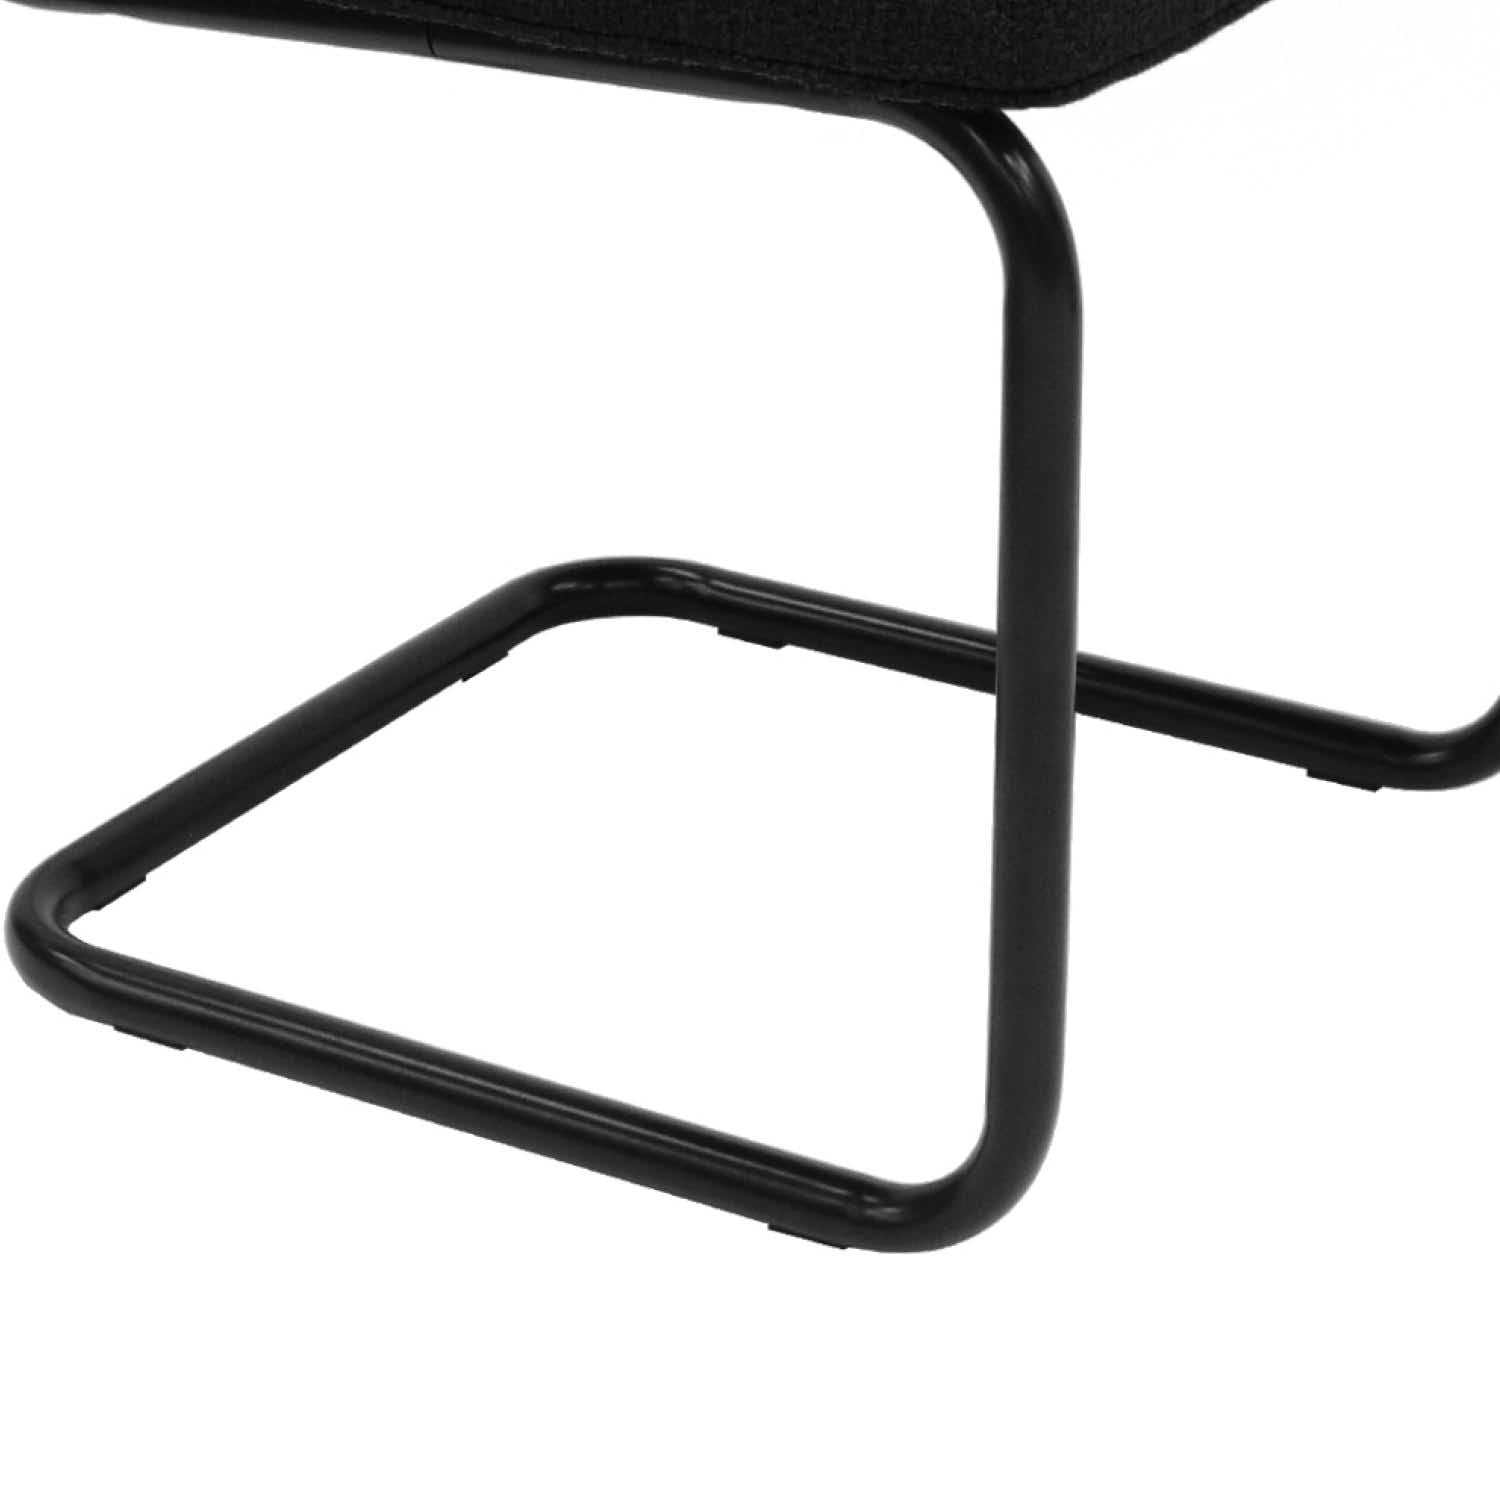 Kick dining room chair Tubular frame Yves